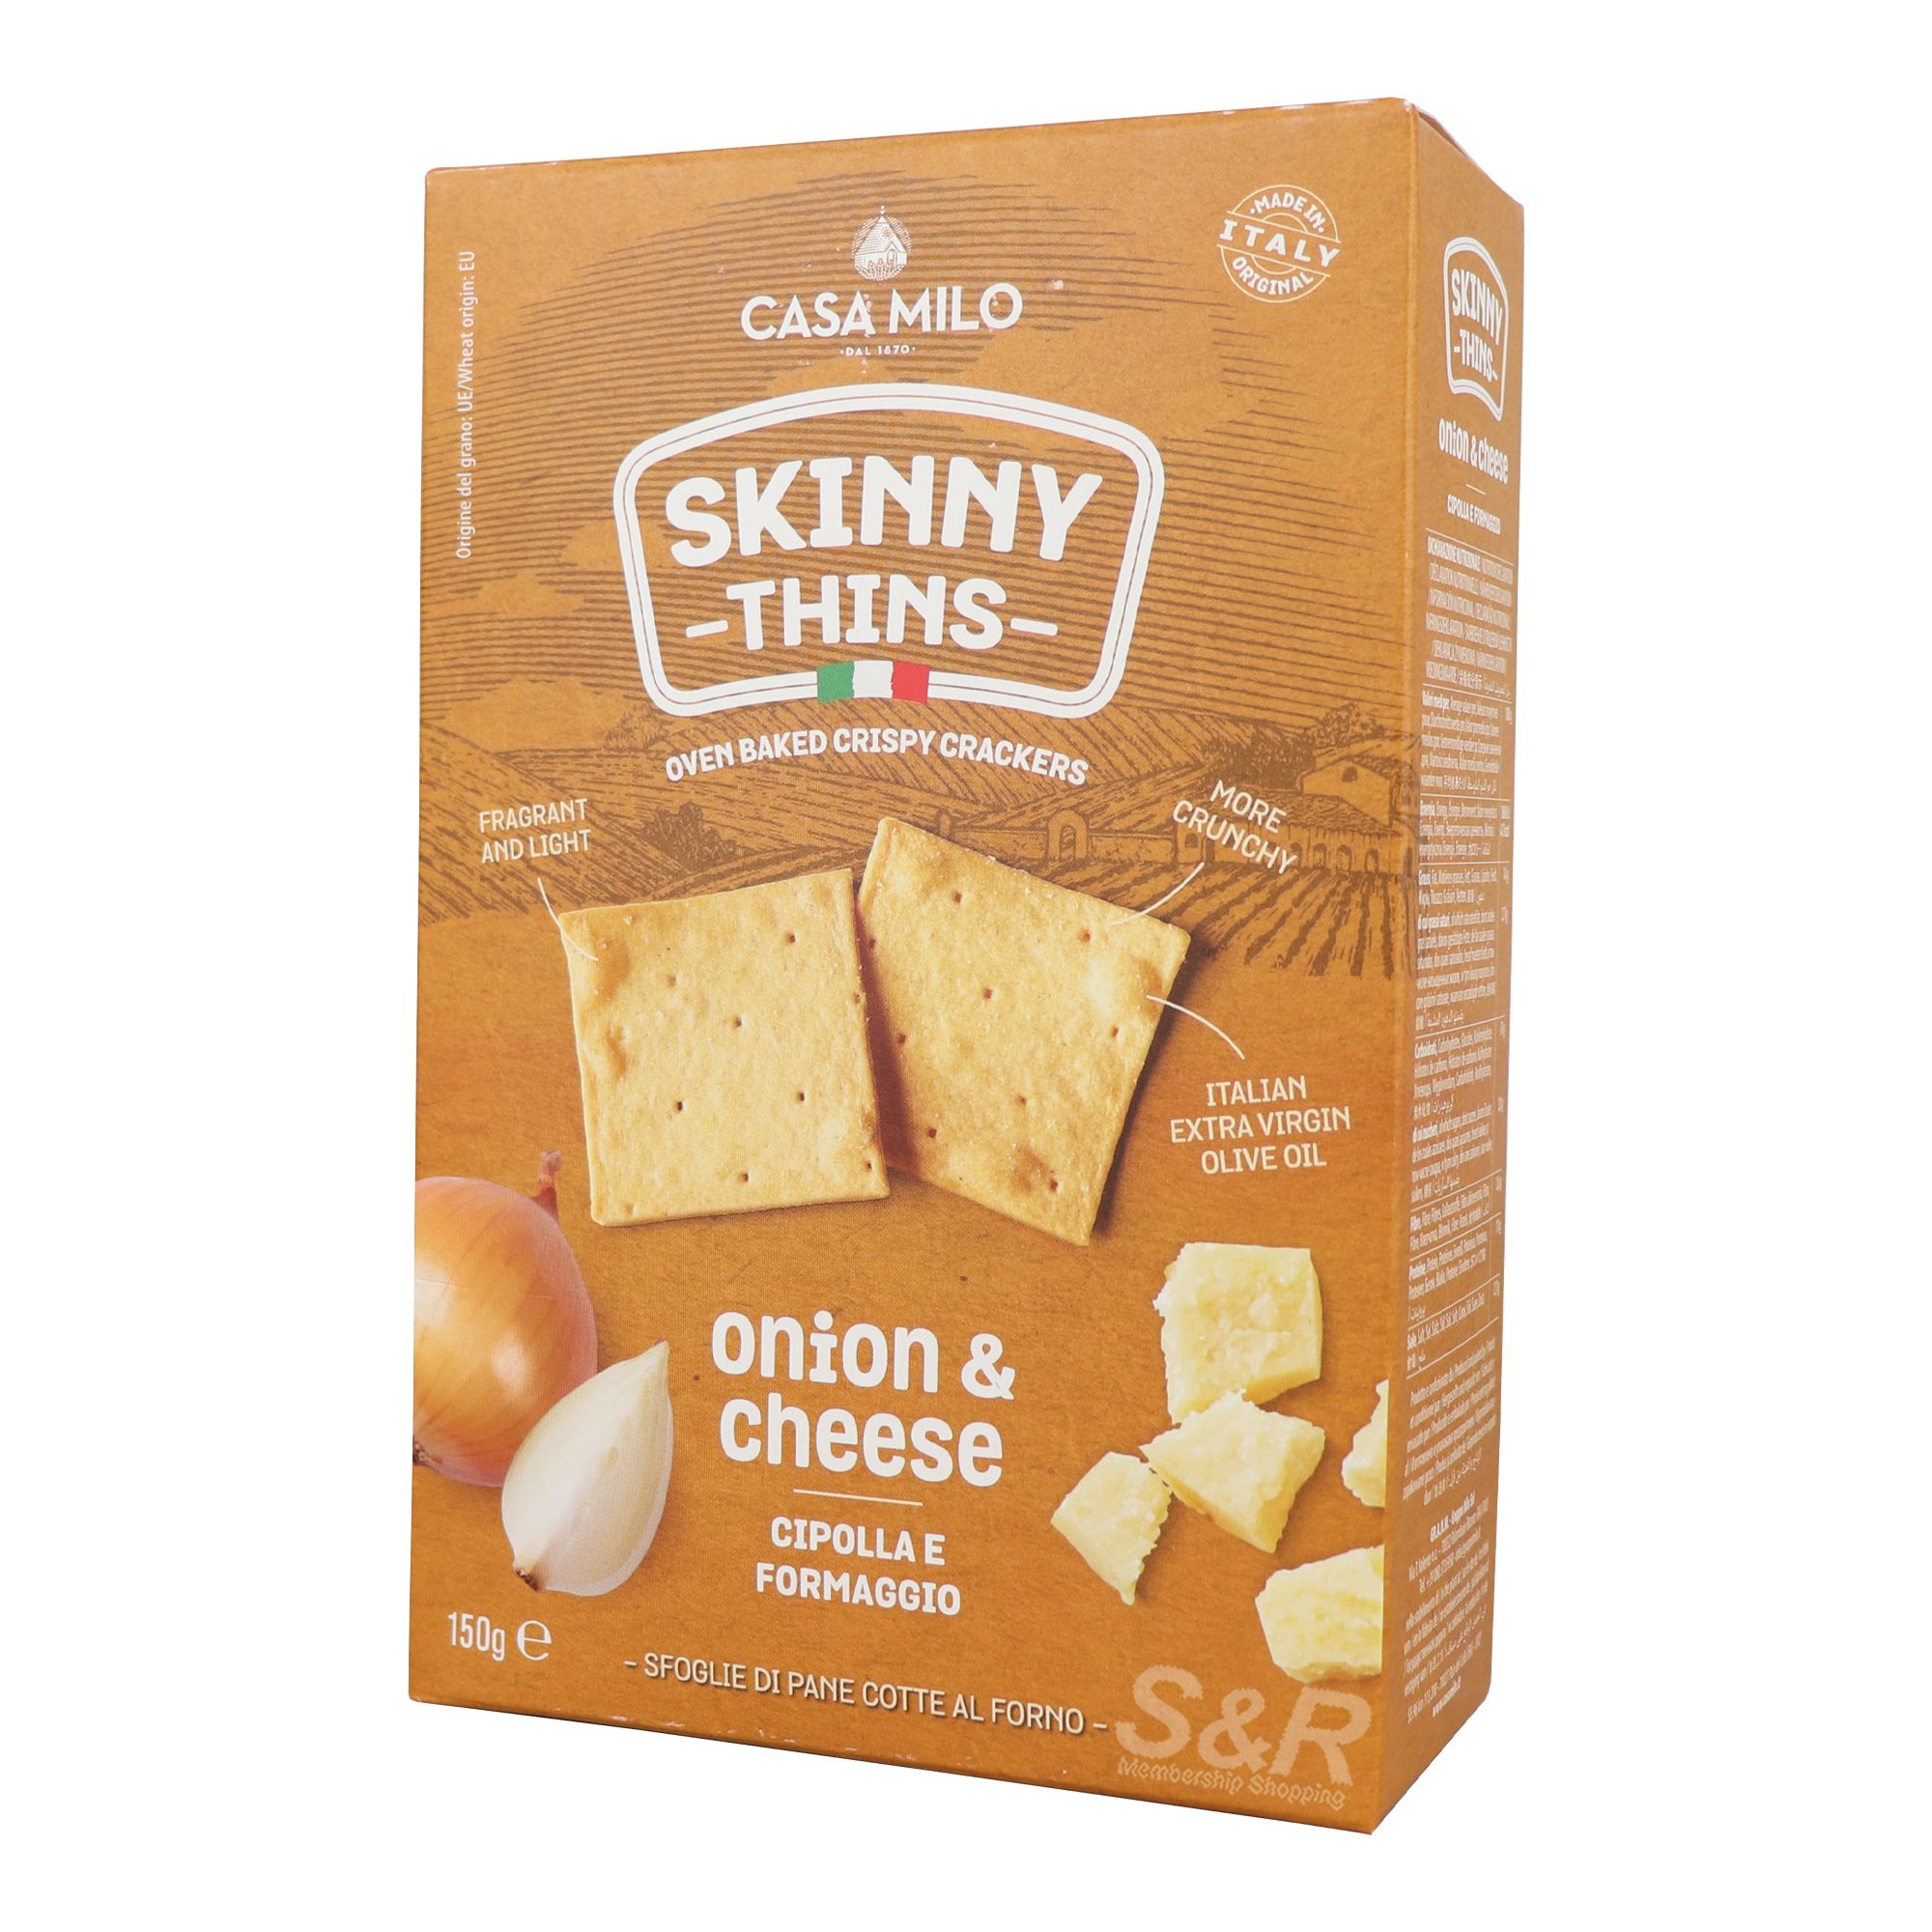 Casa Milo Skinny Thins Onion & Cheese 150g